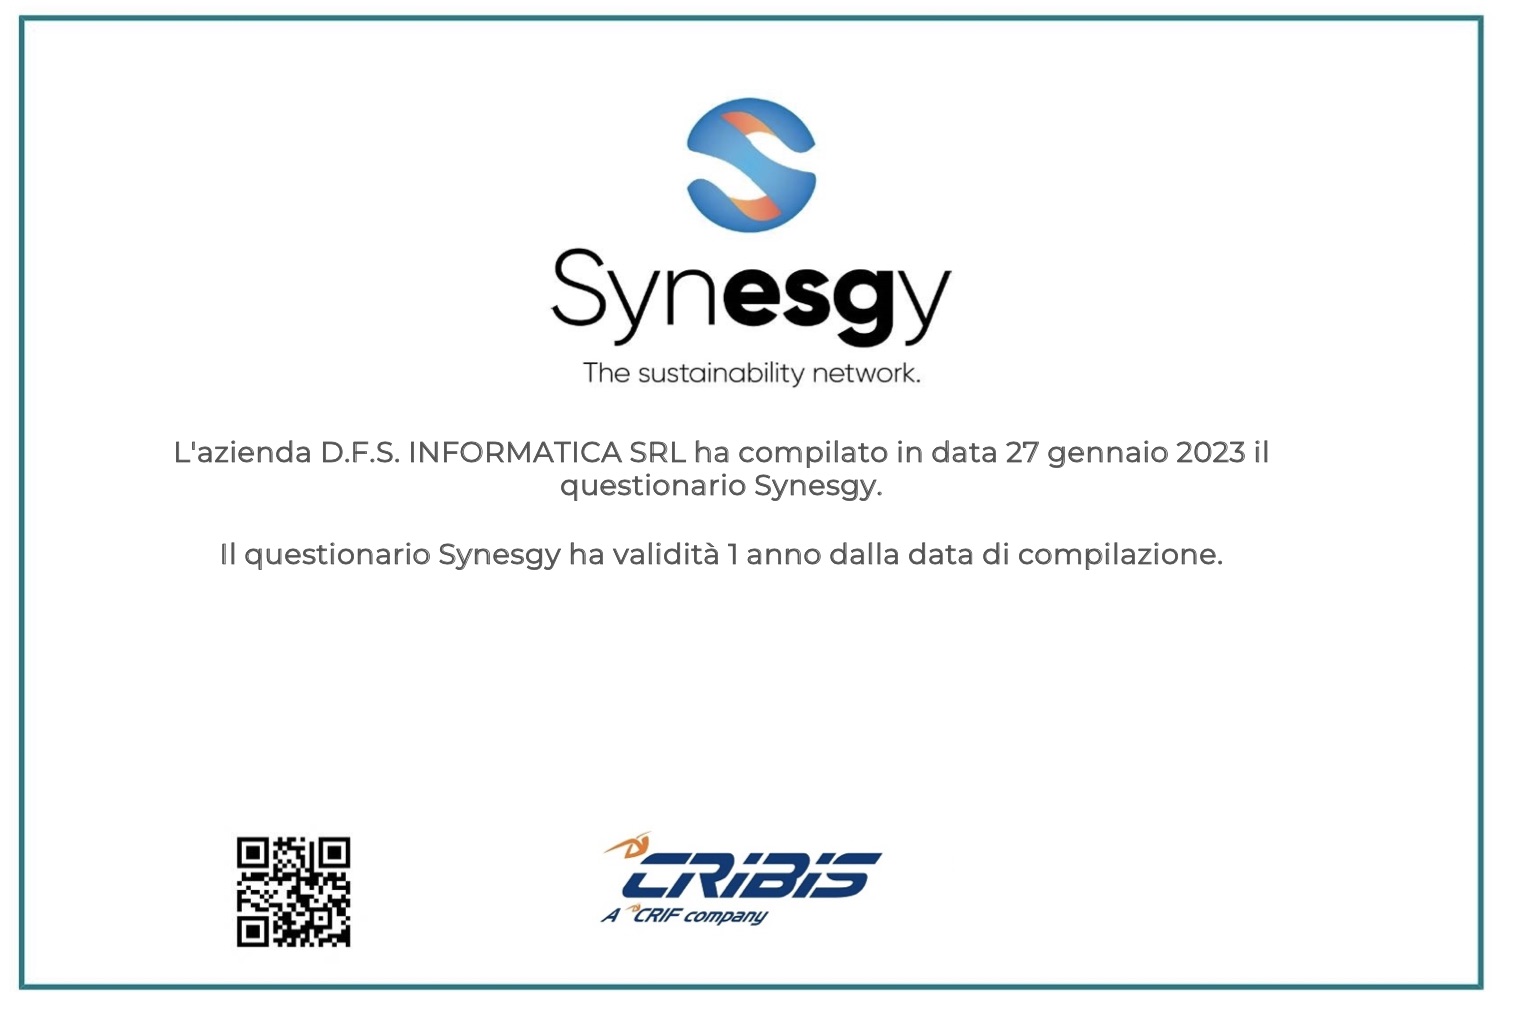 SynESGy DFS Informatica